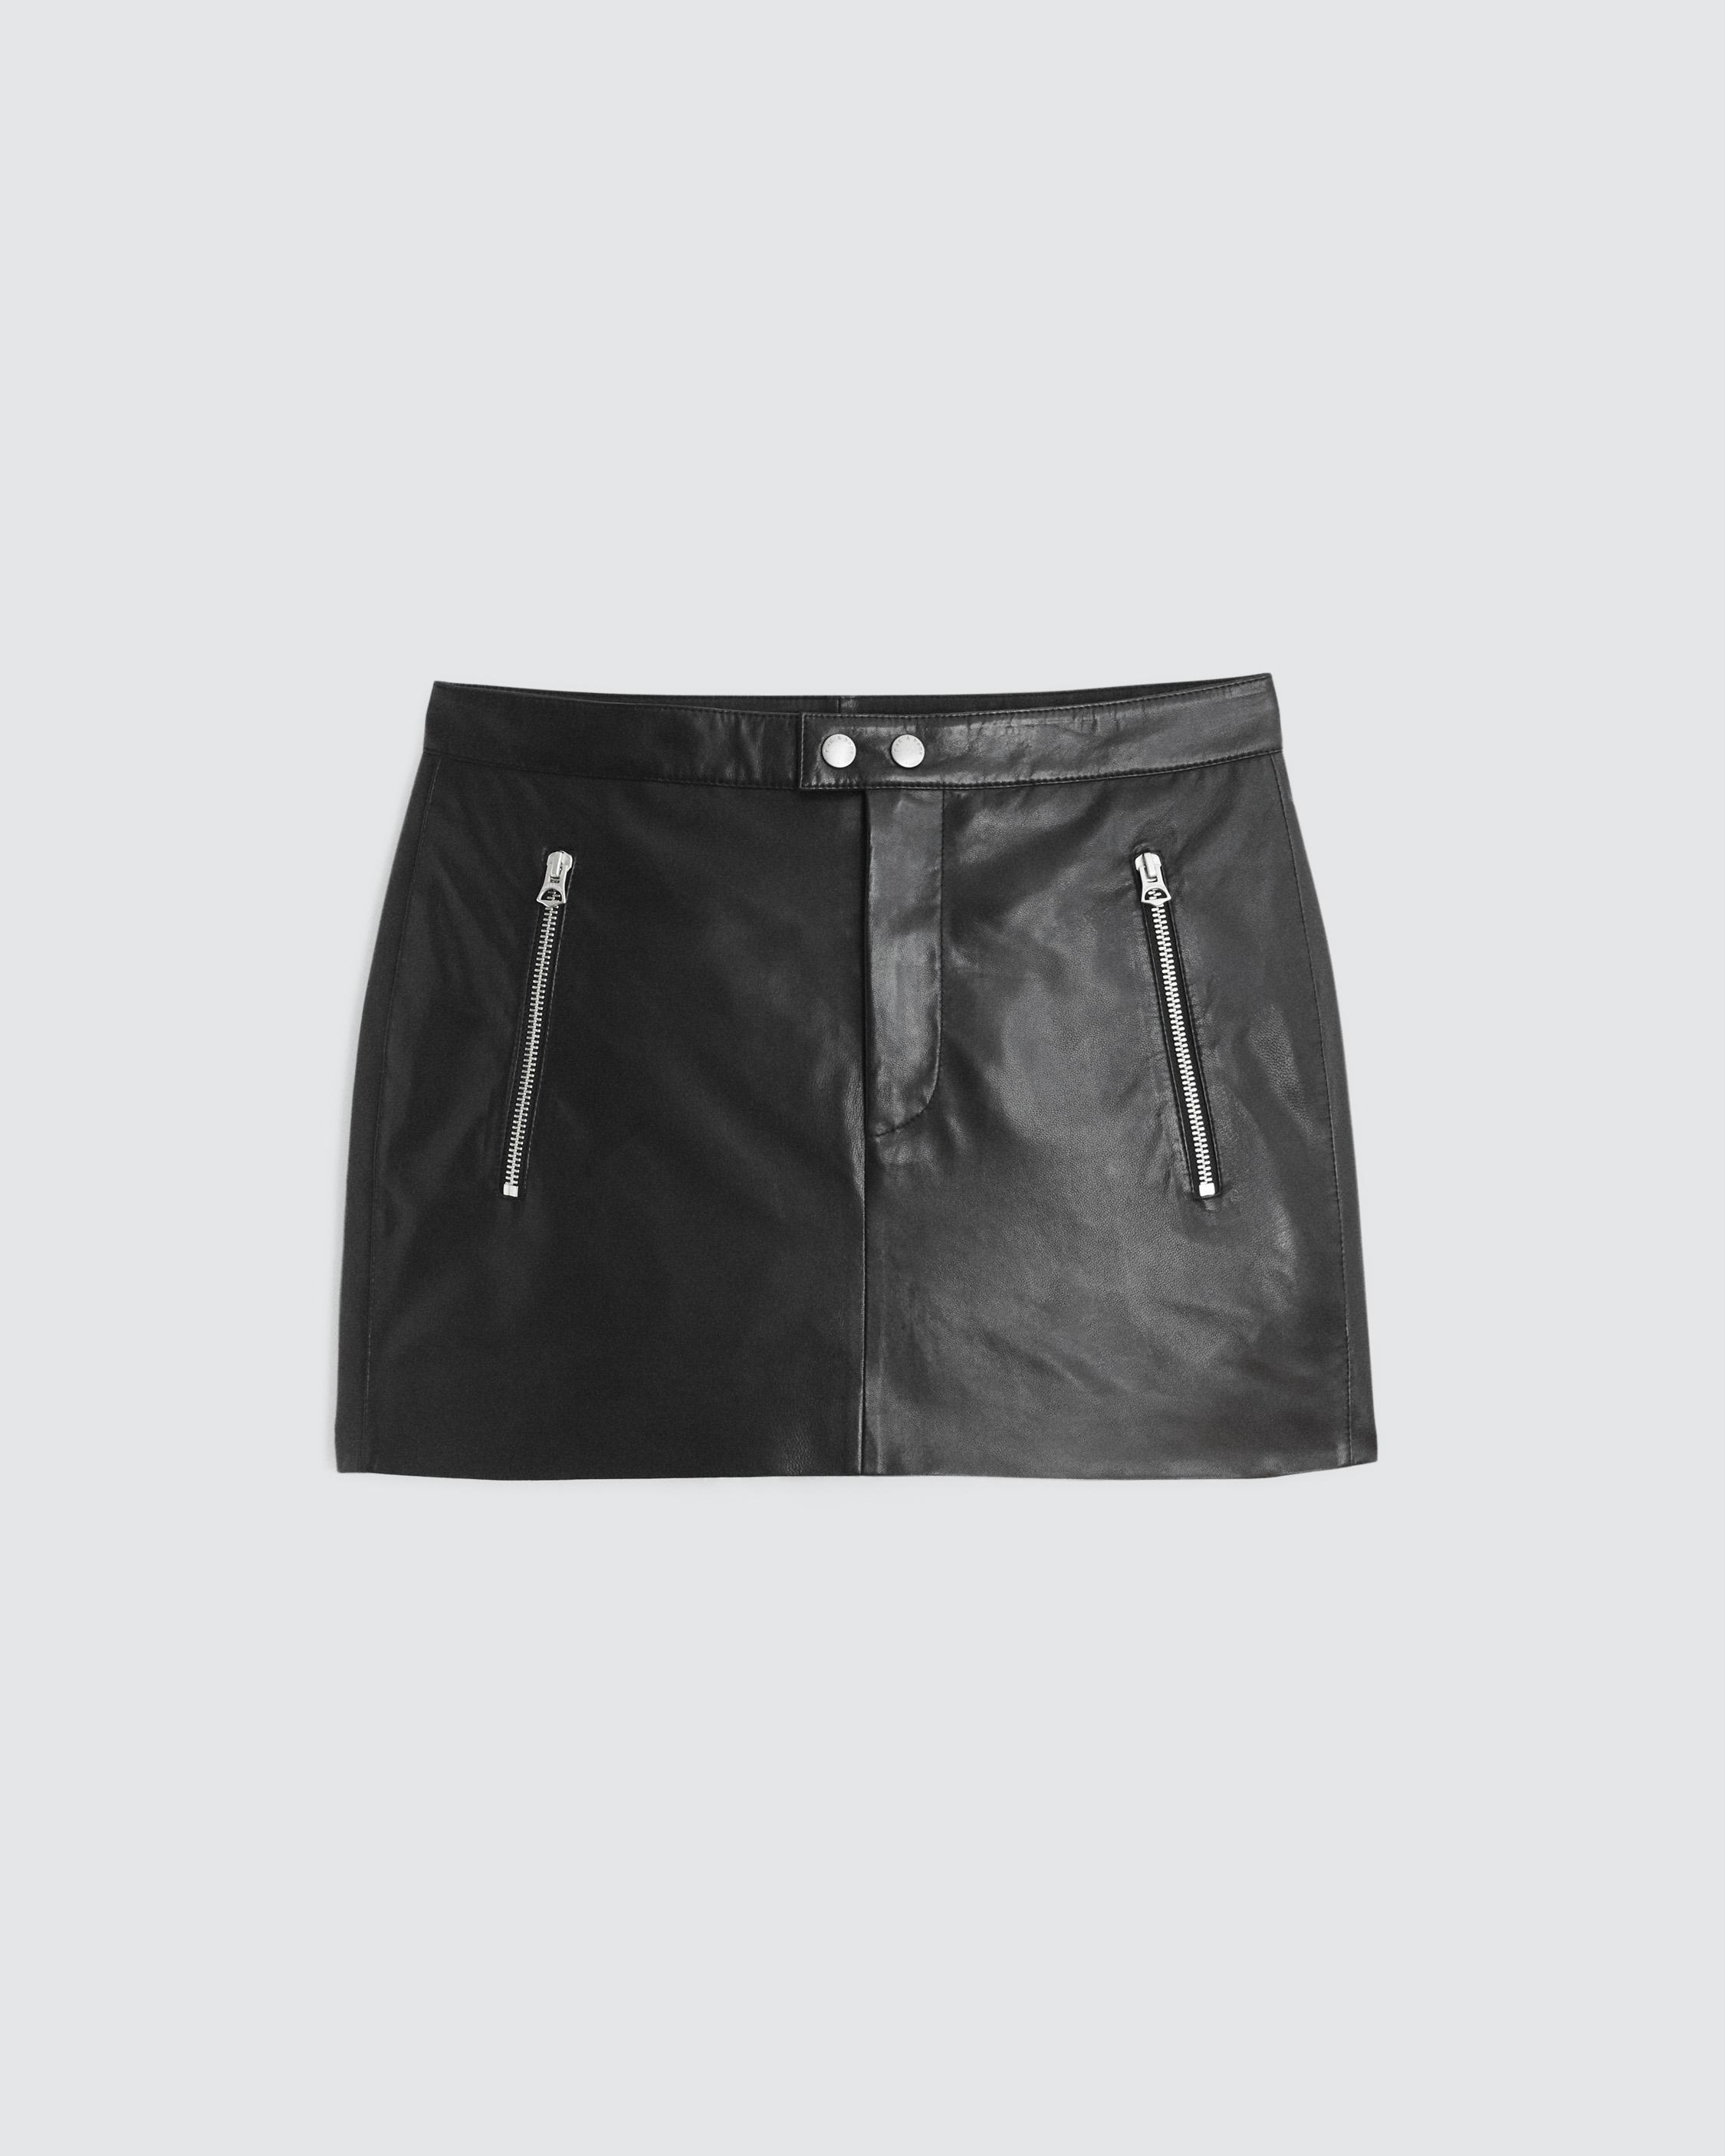 Nora Leather Skirt
Mini - 1